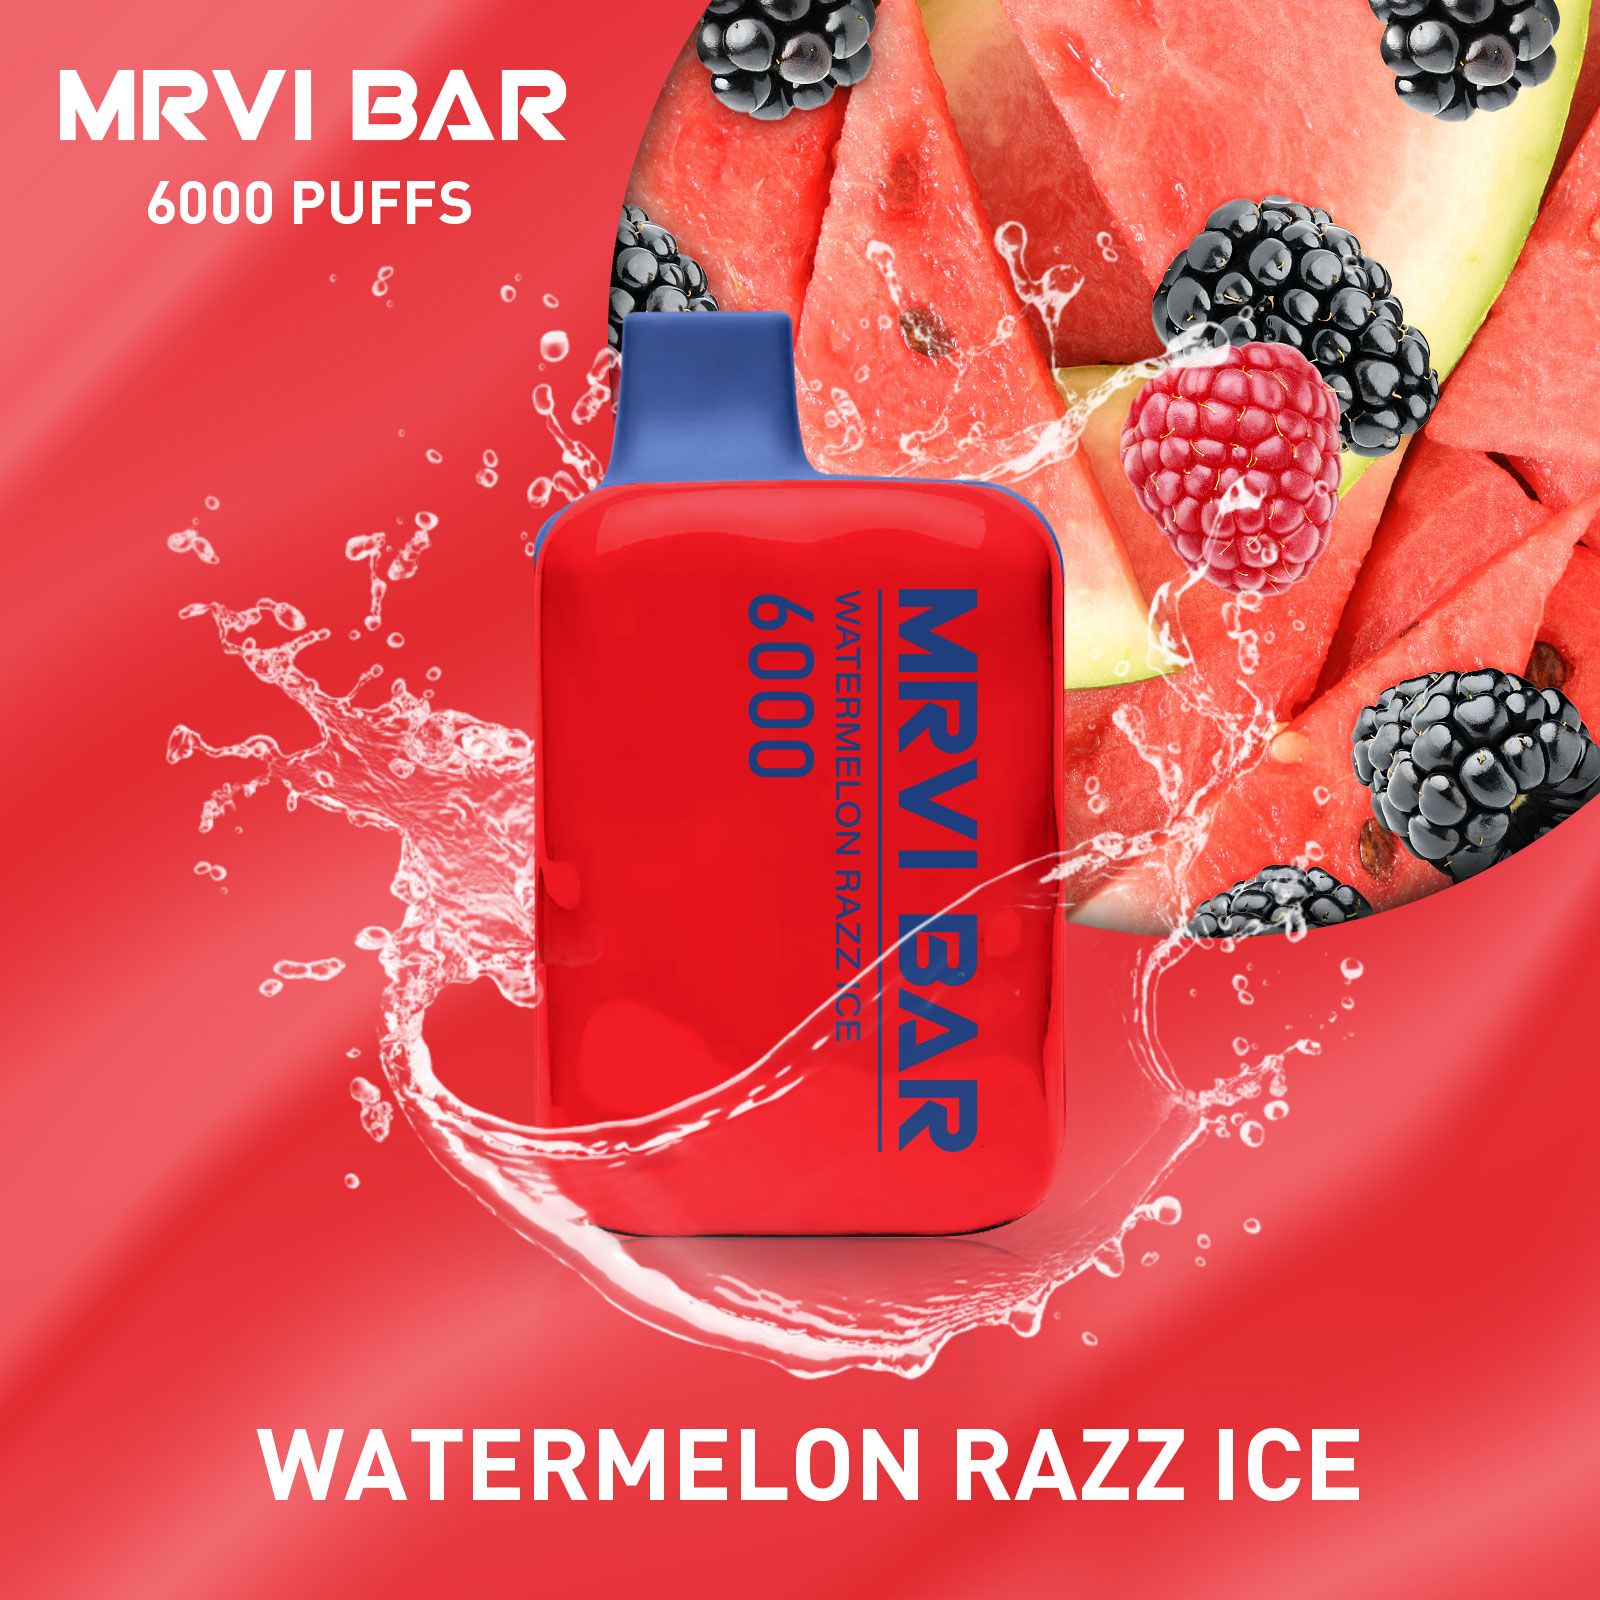 Watermelon Razz ice